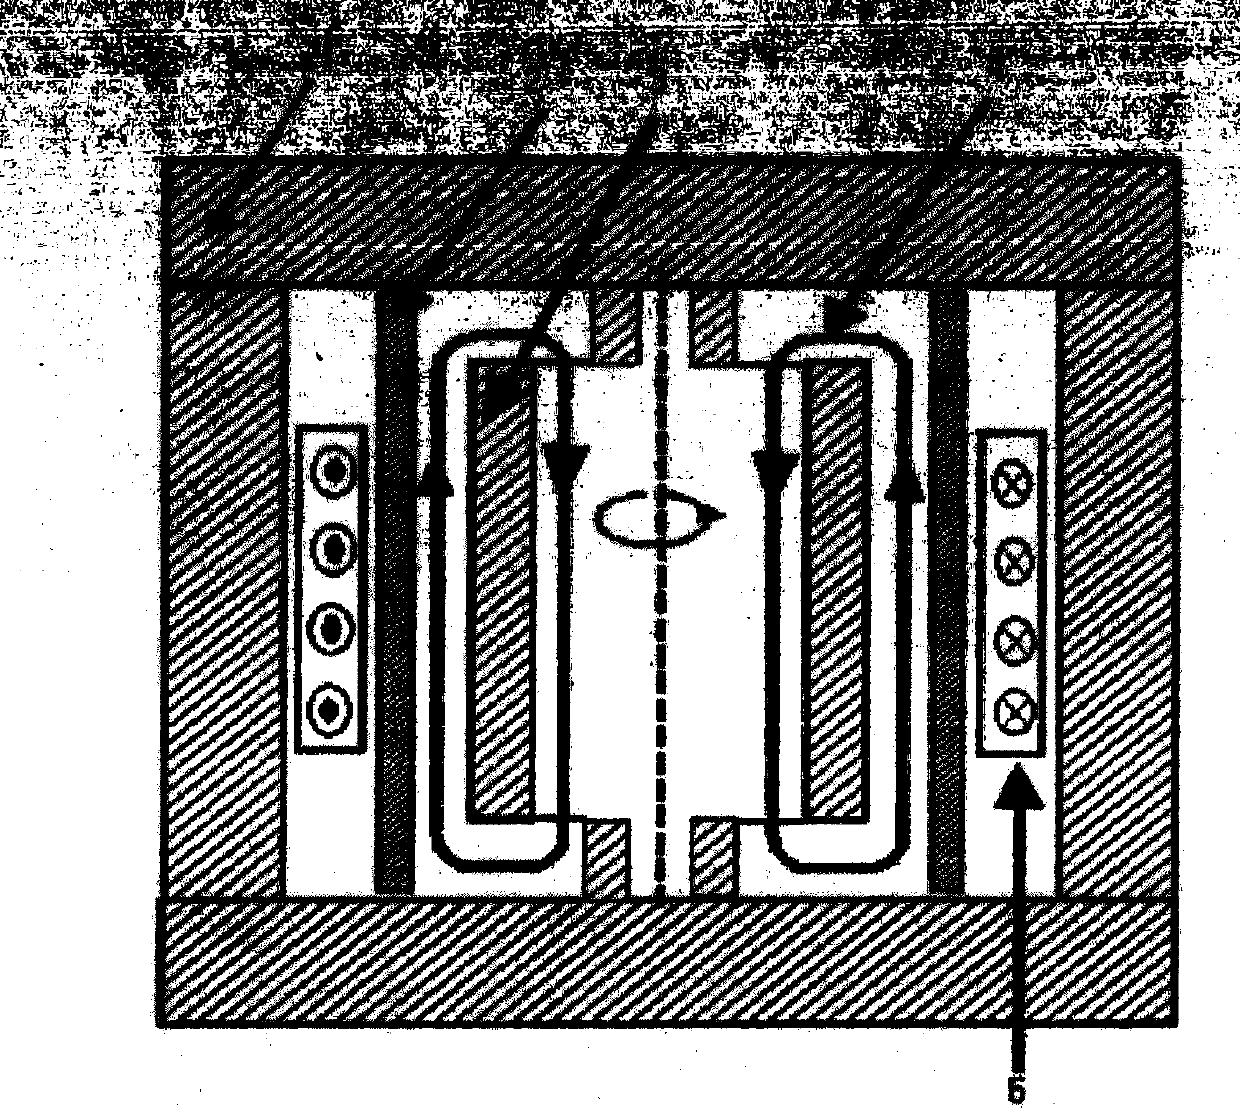 Vertical double-excitation controllable electric reactor